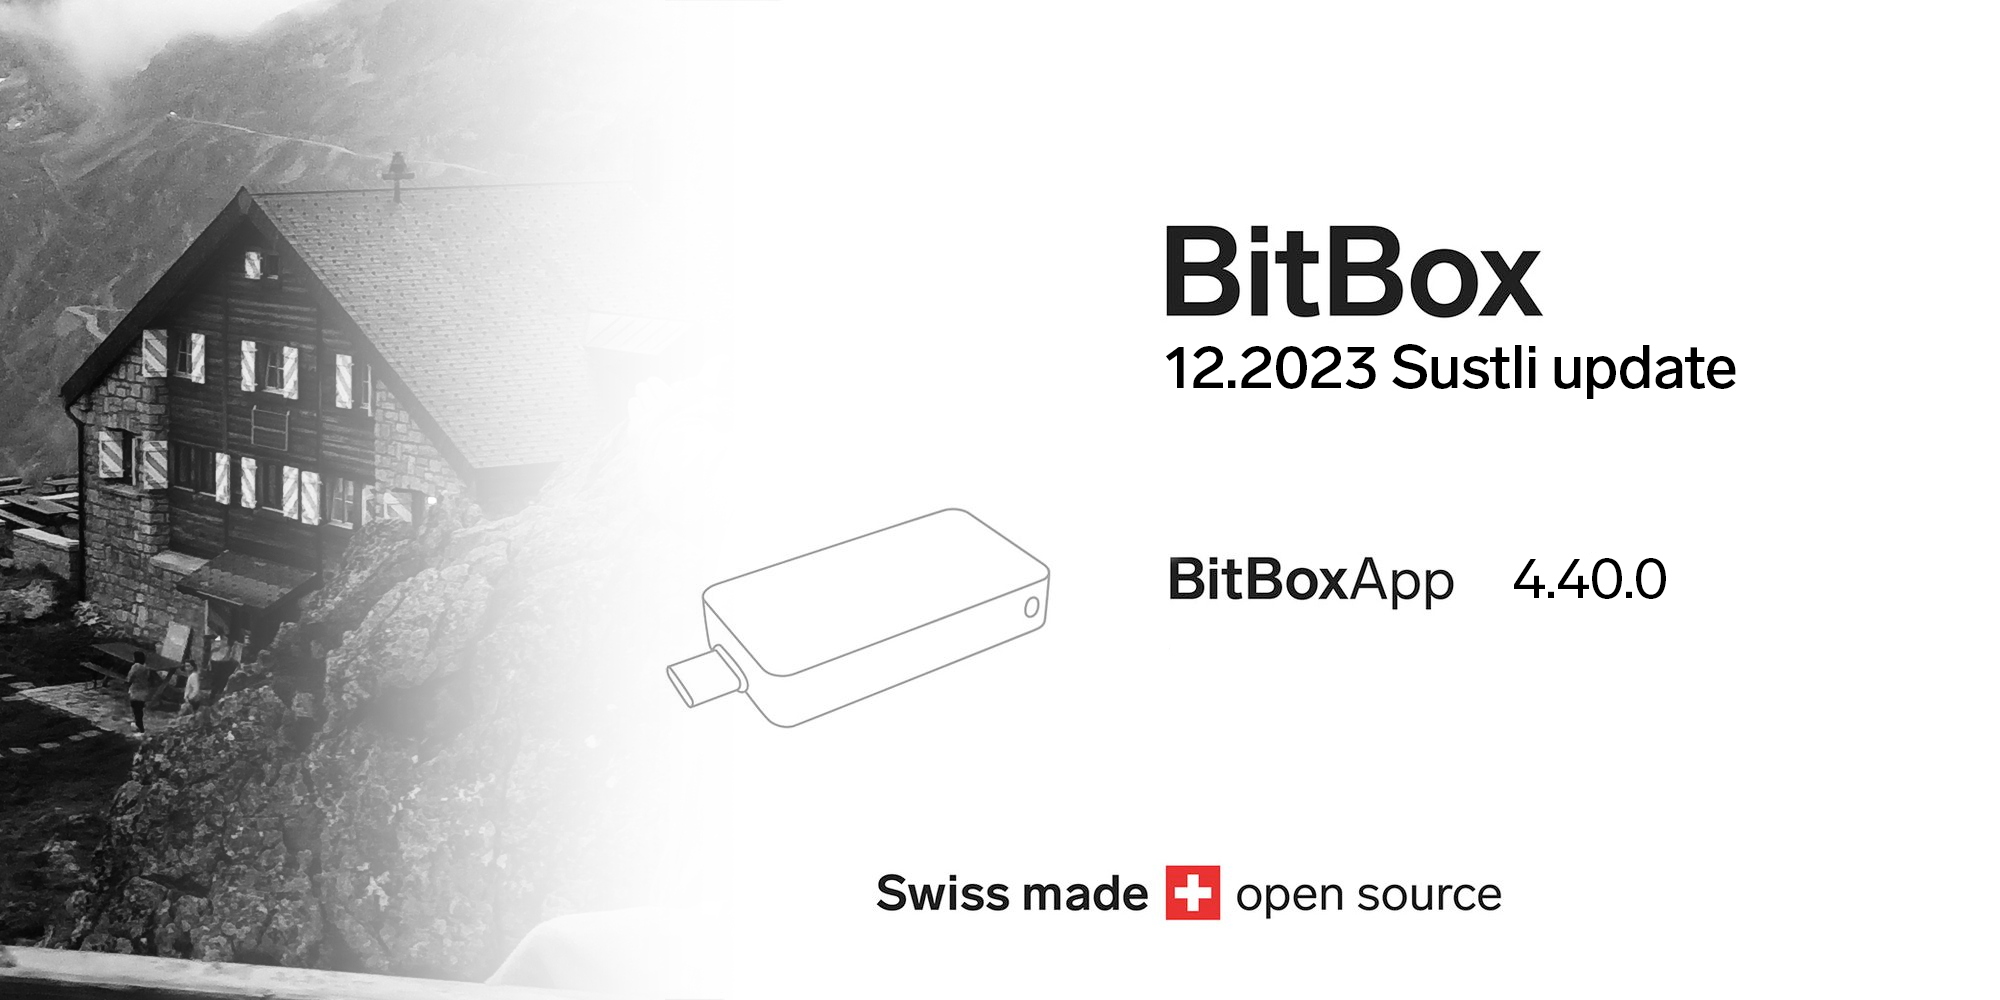 BitBox 12.2023 Sustli update